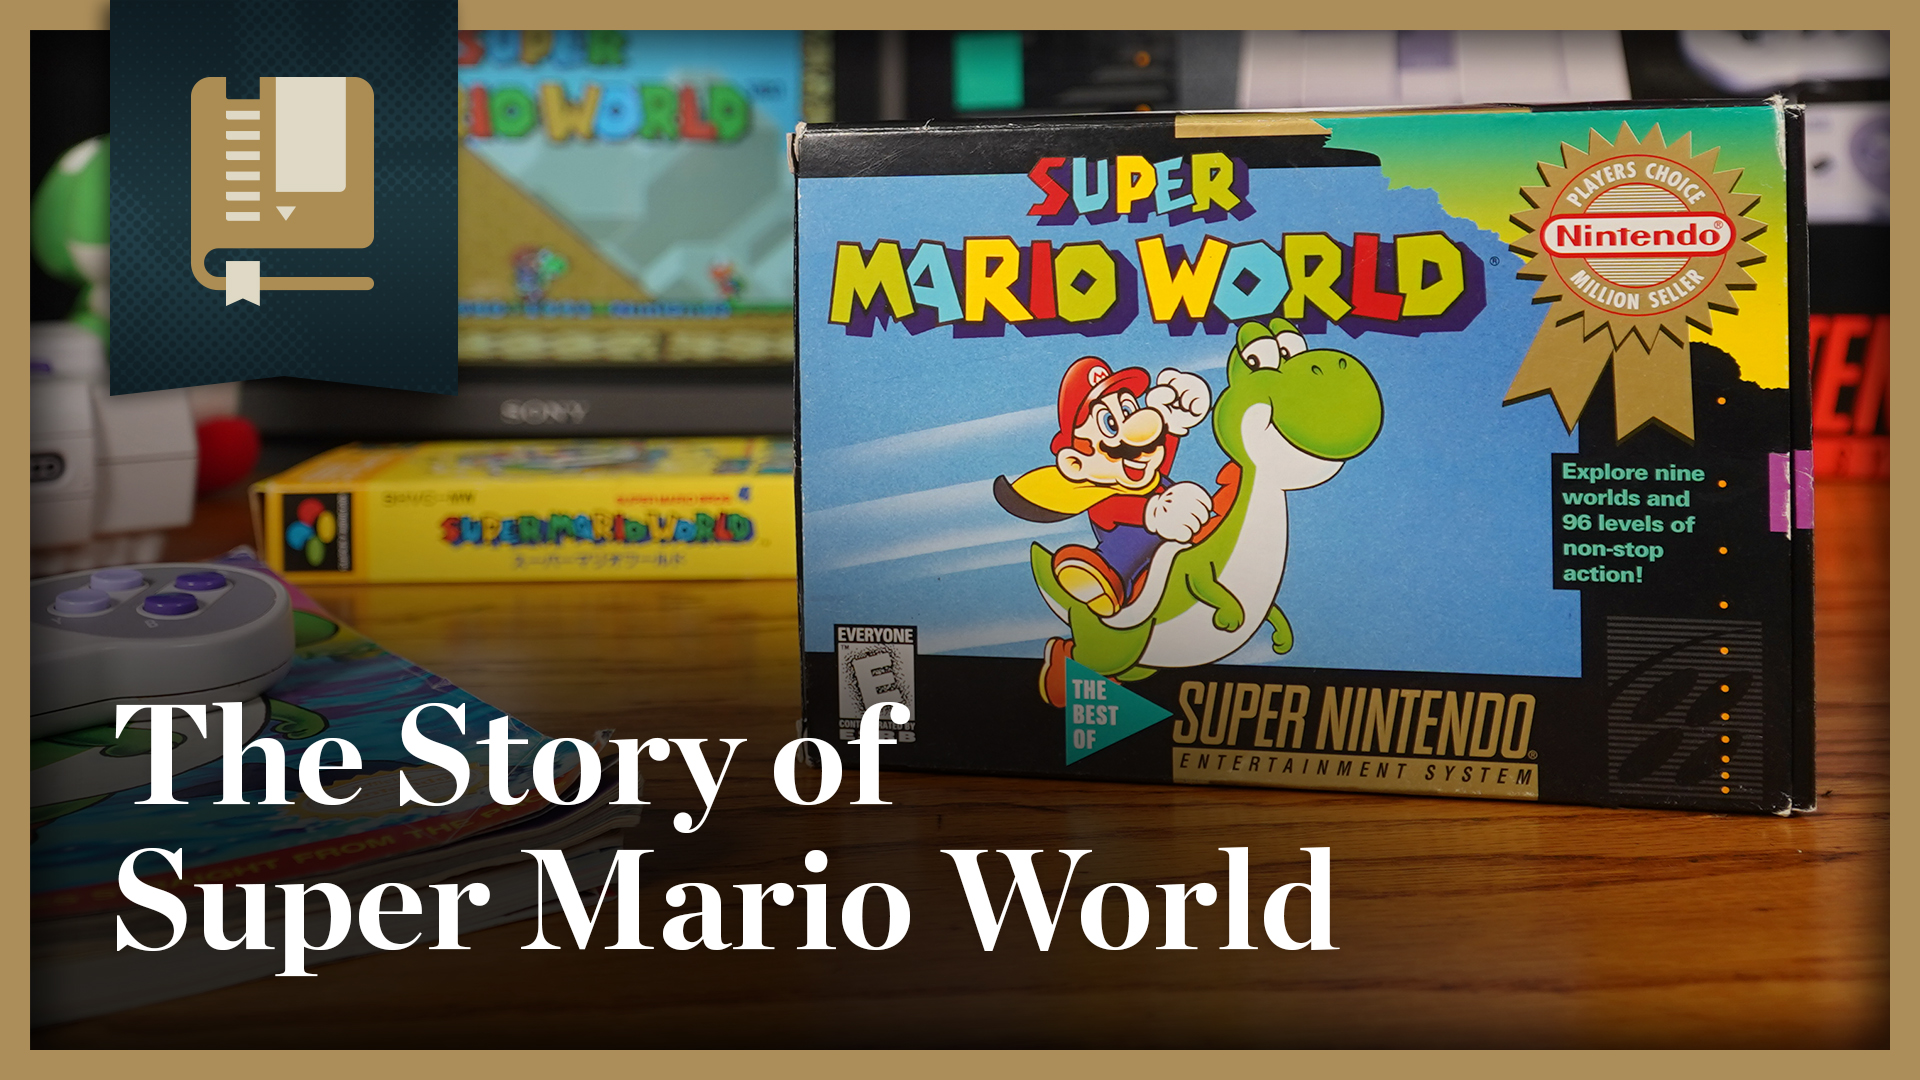 Super Mario World Super Nintendo Entertainment System (SNES) ROM